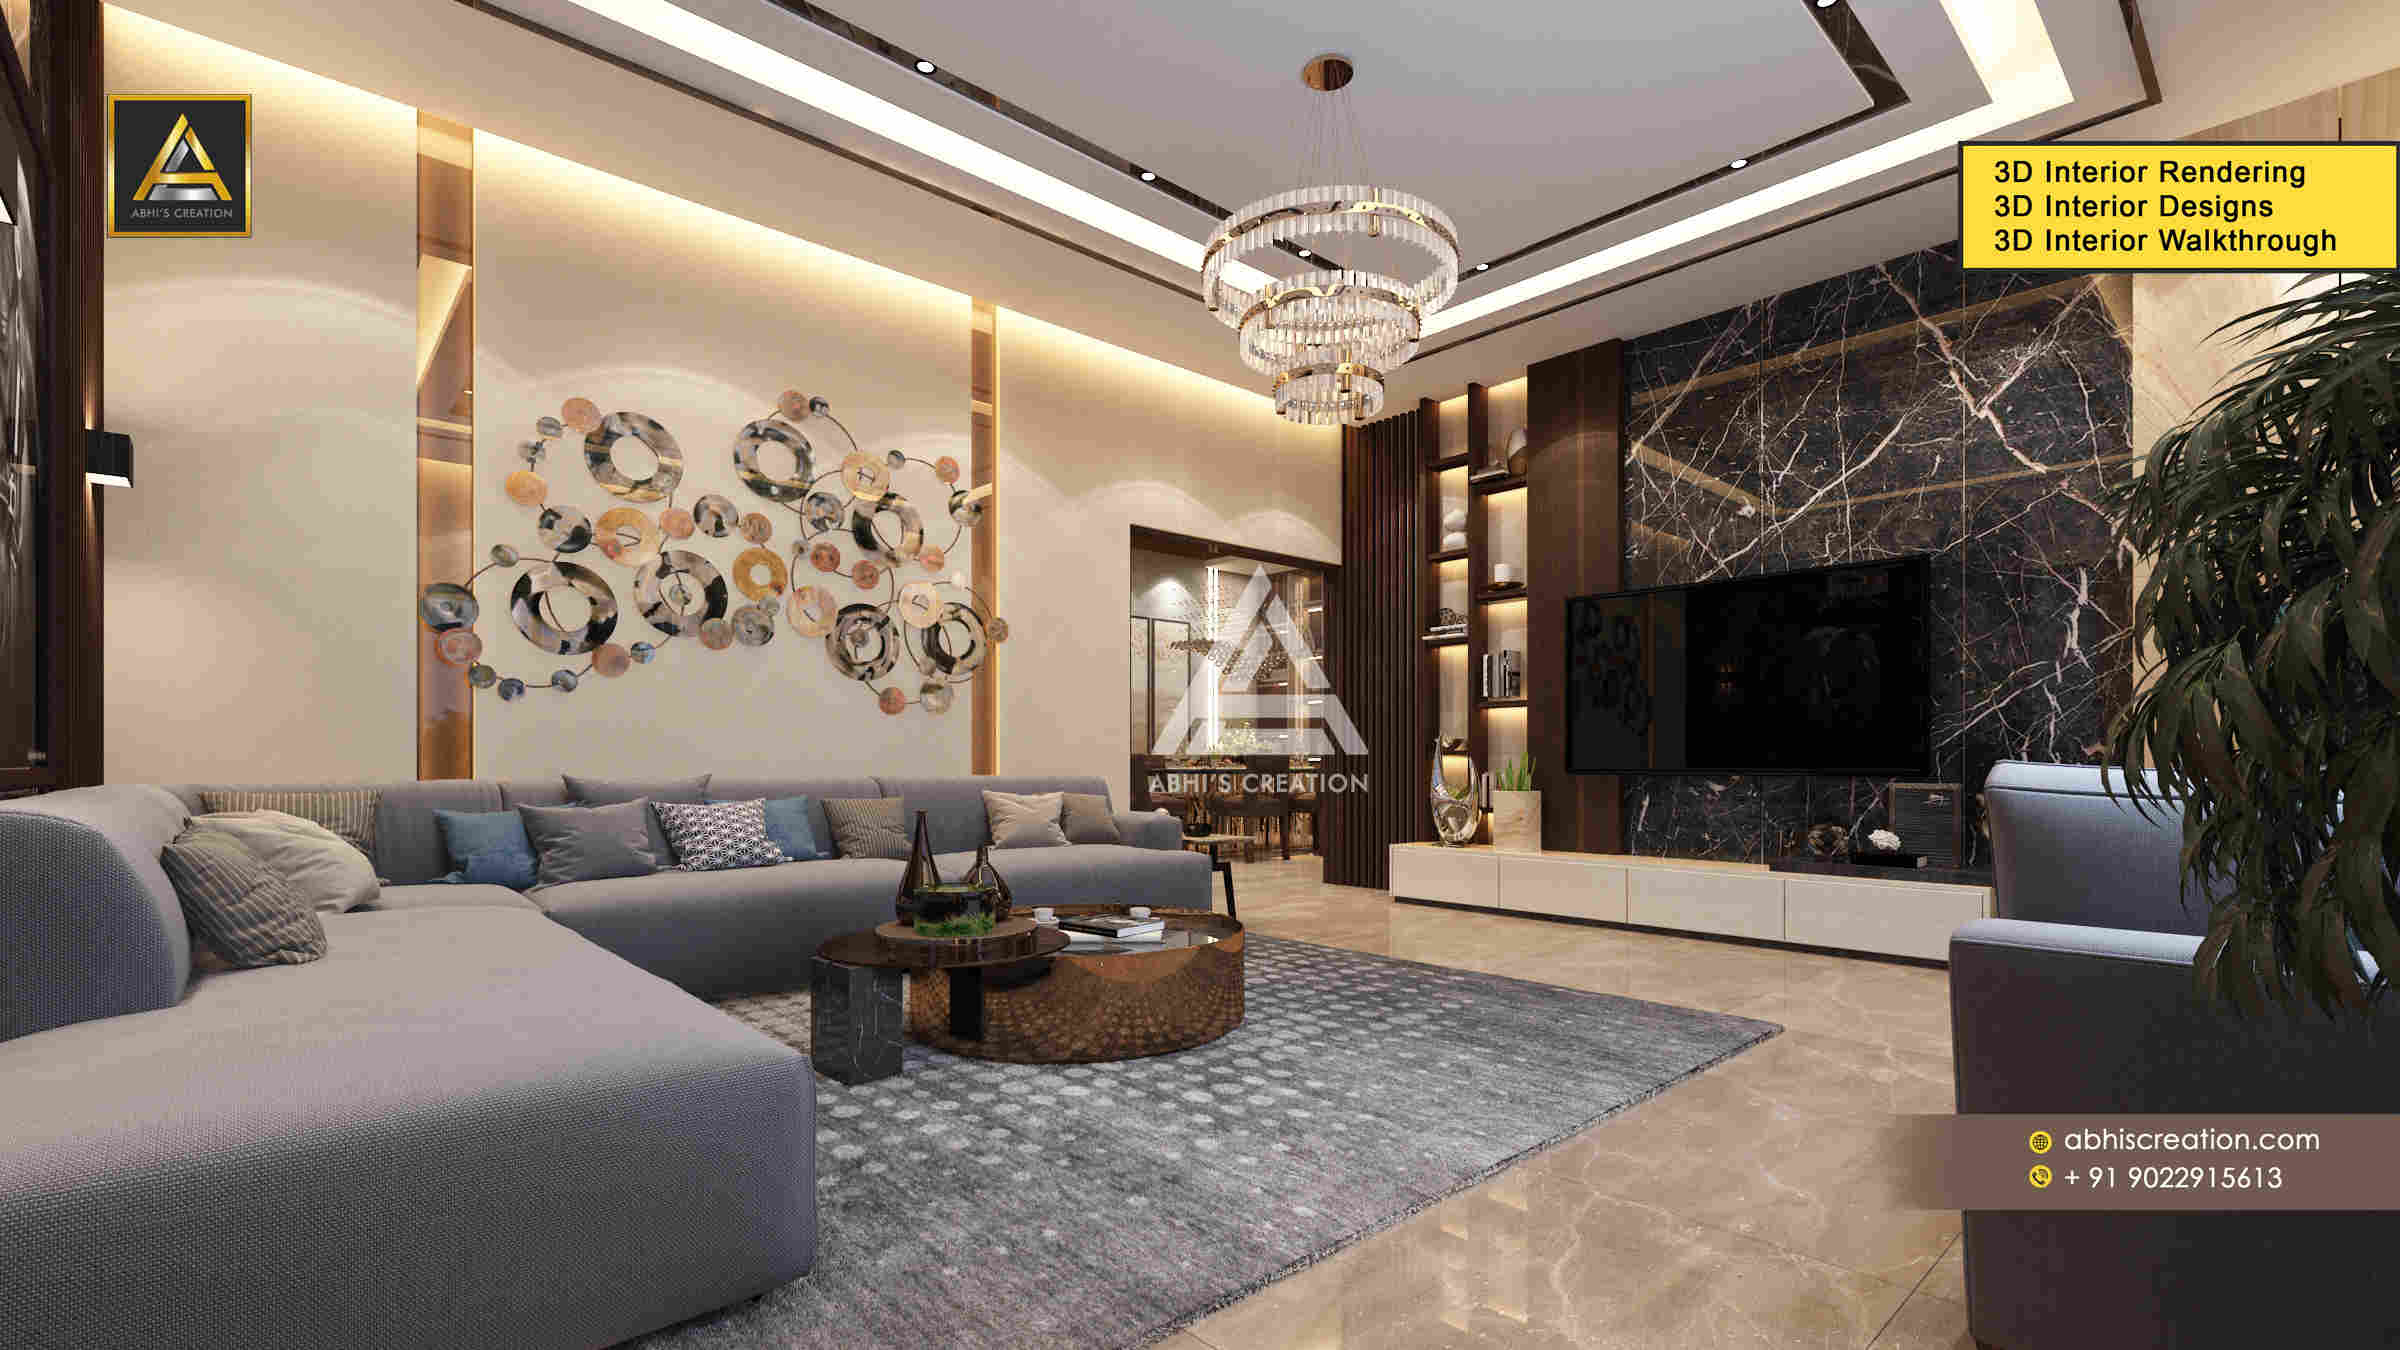 ultra-modern-mater-bedroom-3d-rendering-services-and-3d-interior-deisgn.jpg